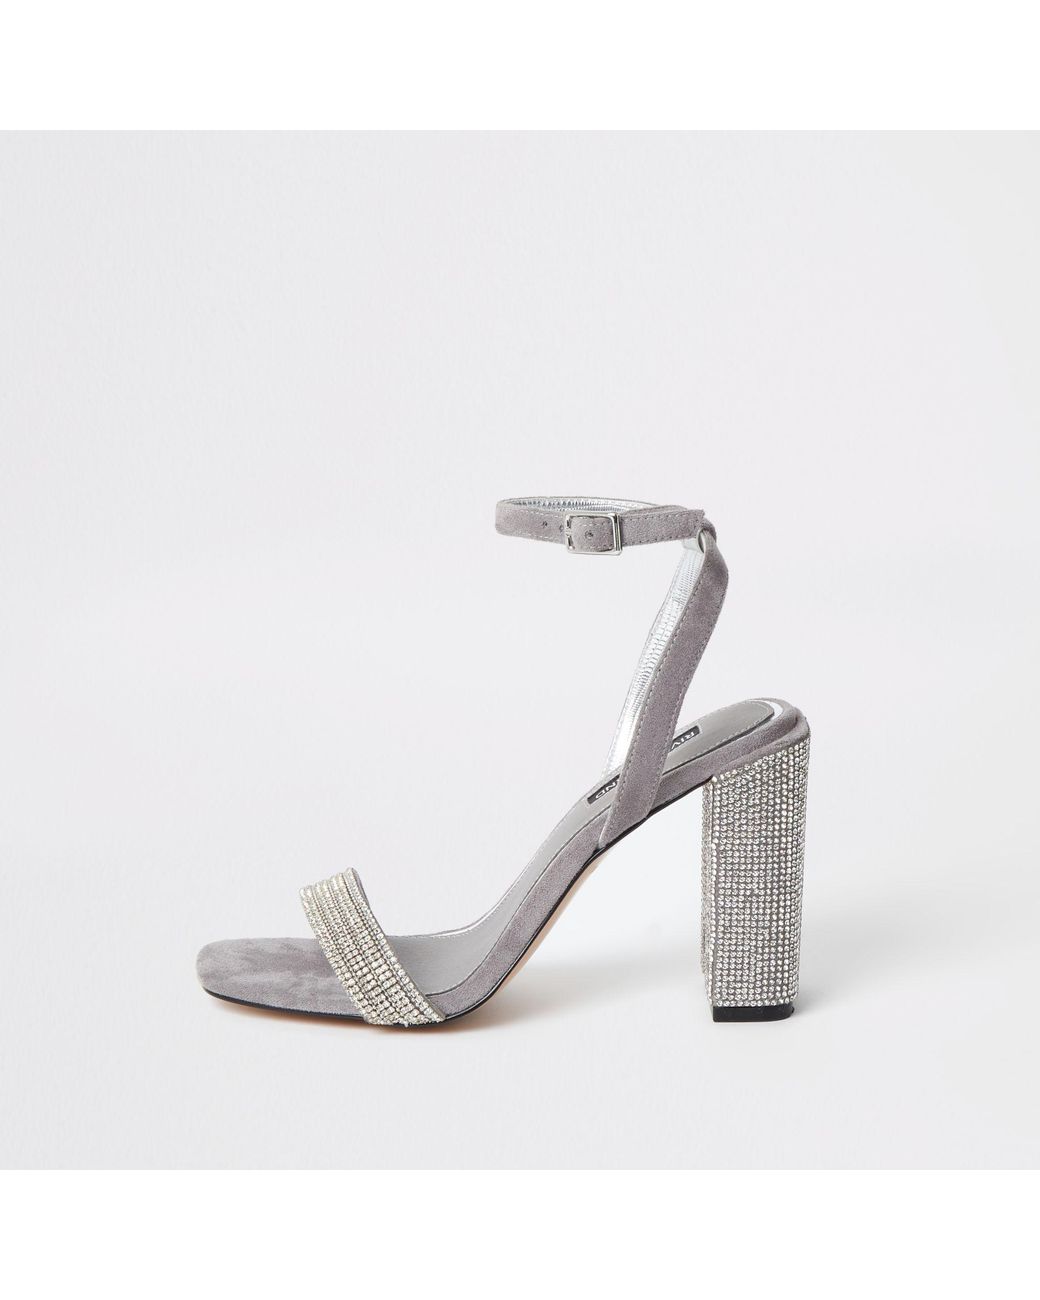 Gold Block Heel Sandal Ankle Strap | Women's Shoes Transparent Heel - 2023  New Sexy - Aliexpress